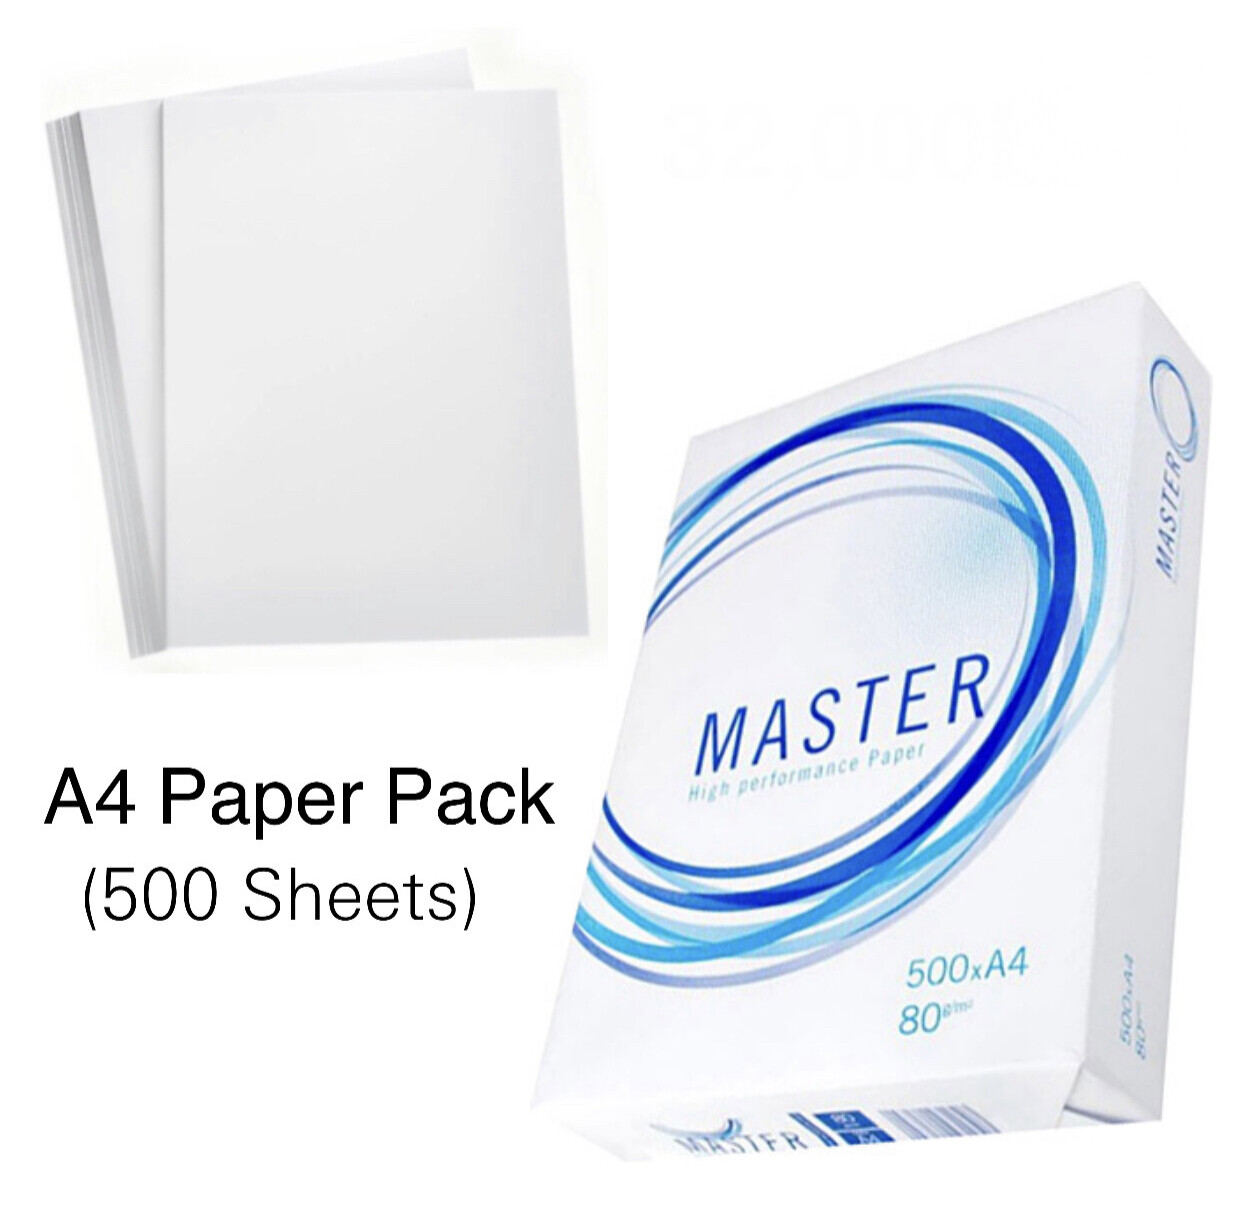 A4 Paper Pack